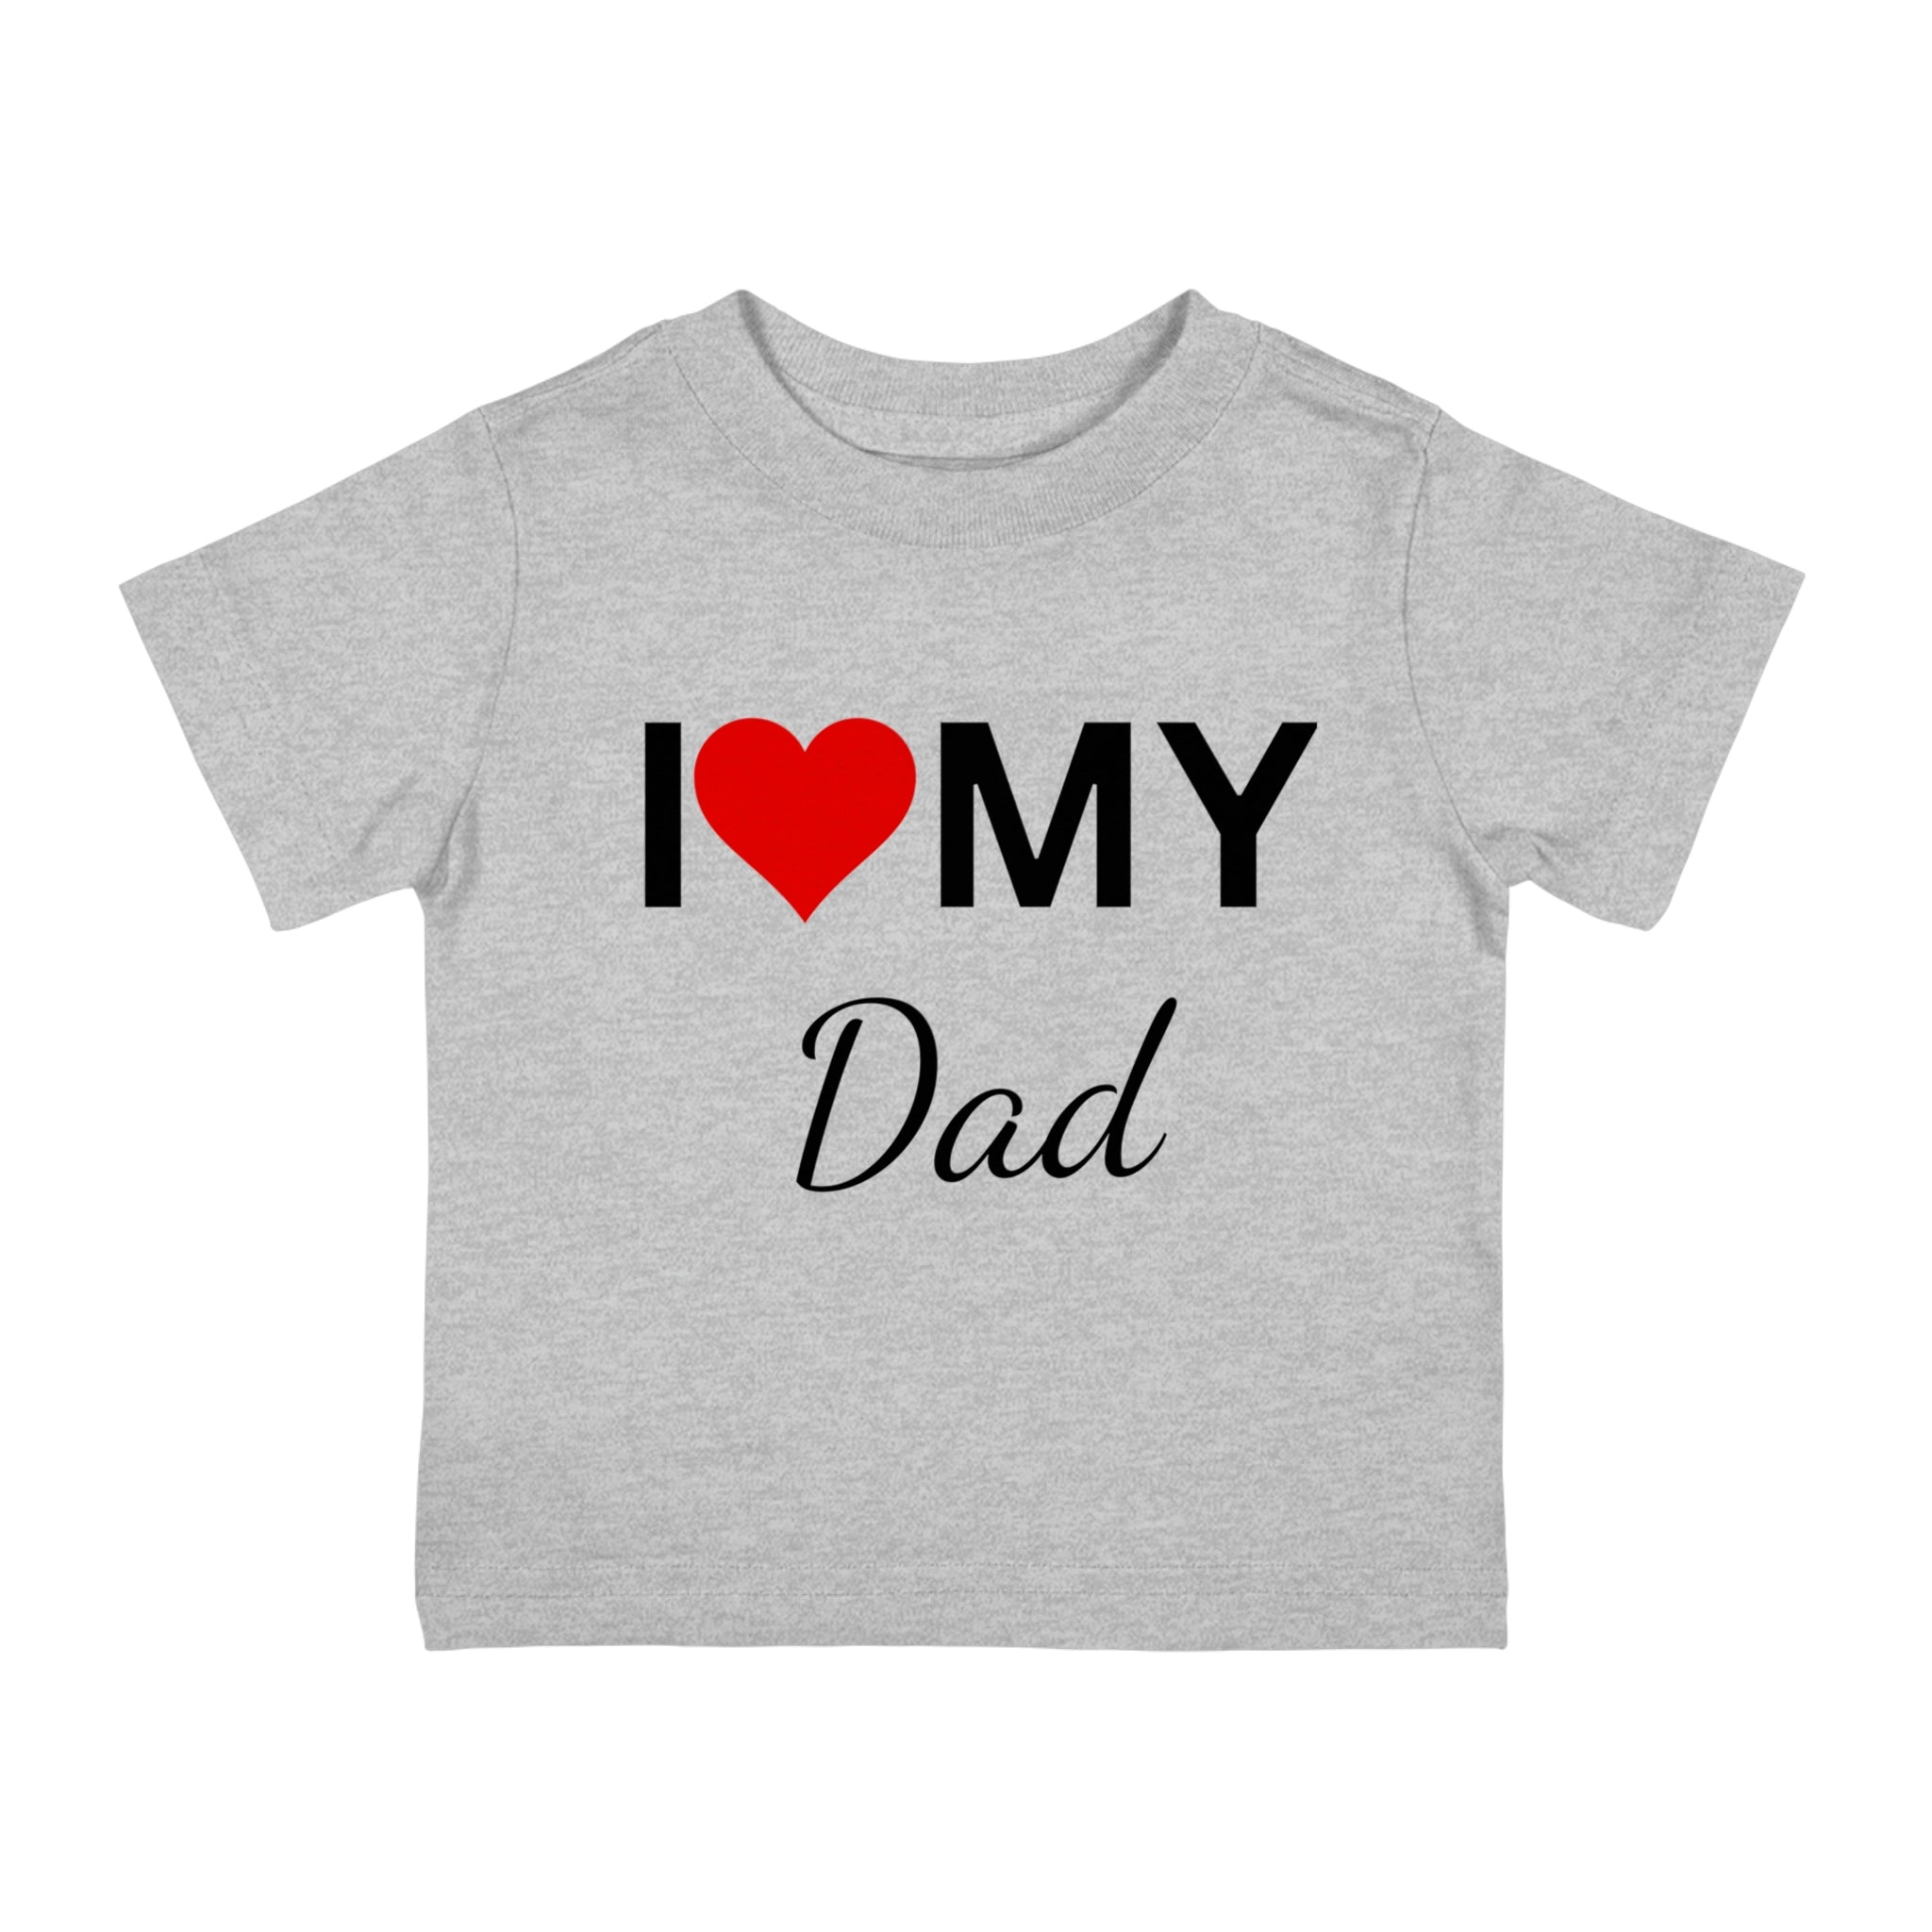 I Love My Dad Infant Shirt, Baby Tee, Infant Tee